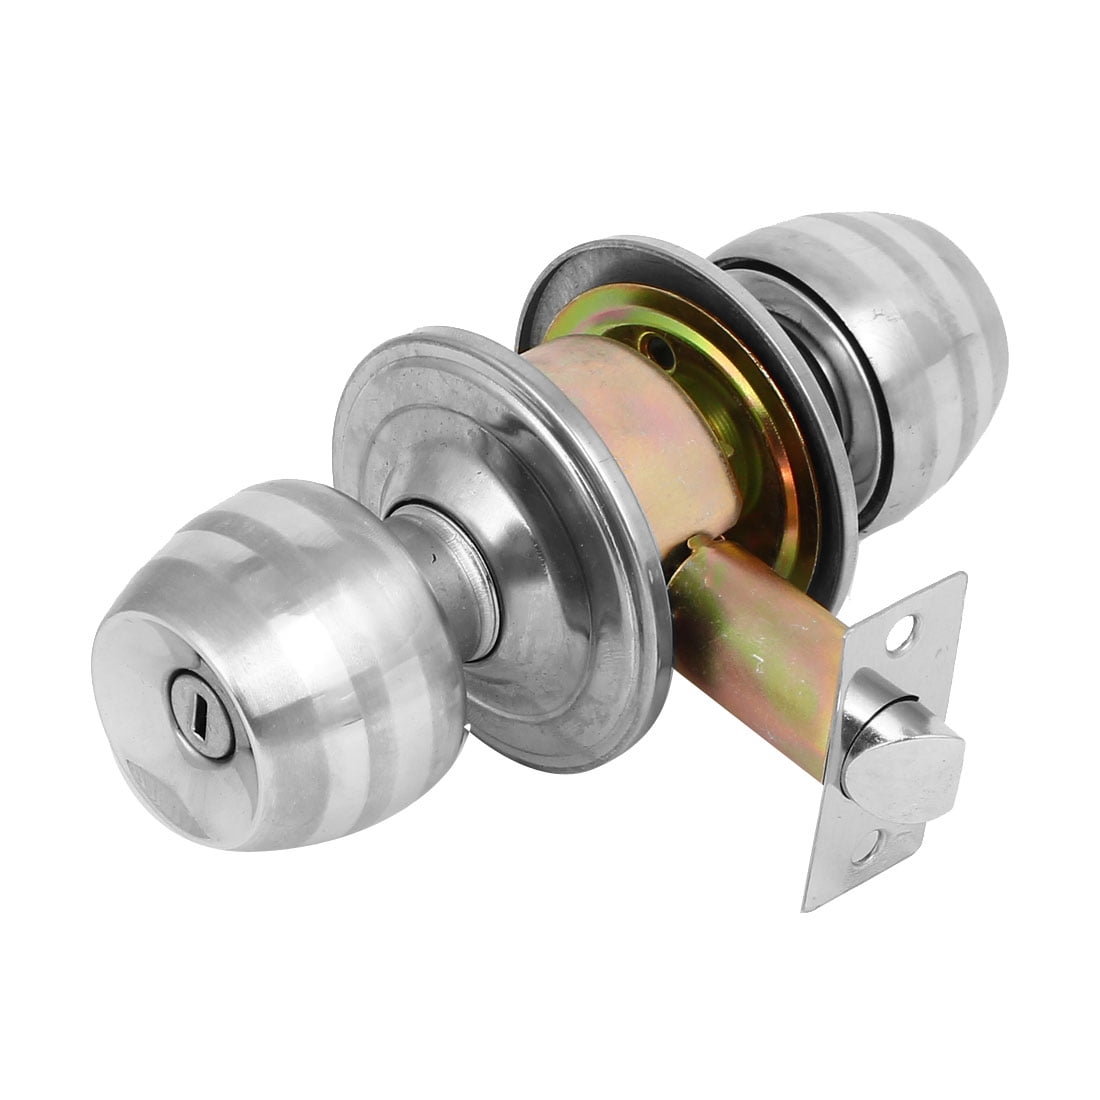 Bathroom Bedroom Door Locks with keys Metal Privacy Round Knob Lockset ...